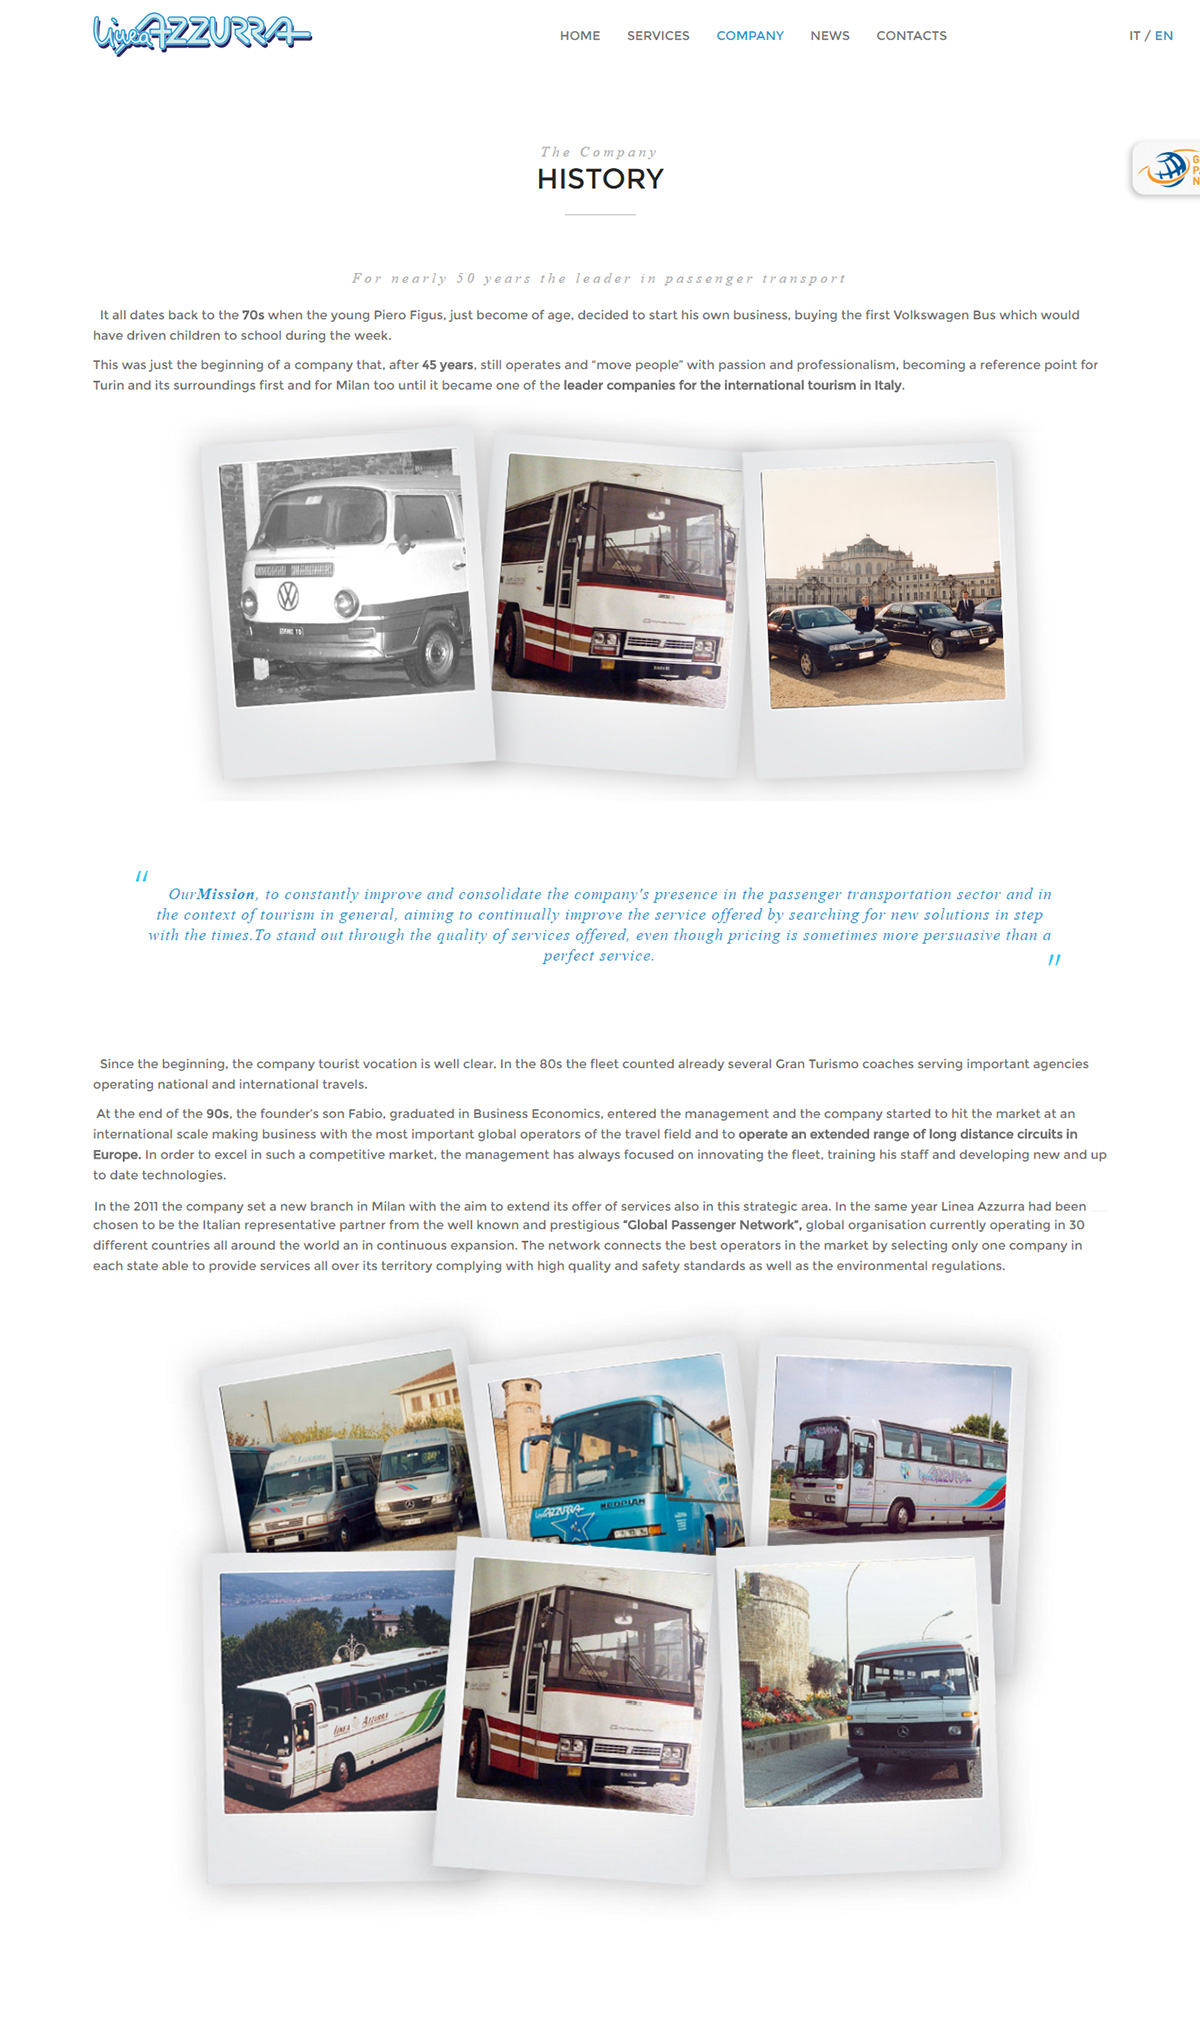 Linea Azzurra Bus - screenshot of the company history page